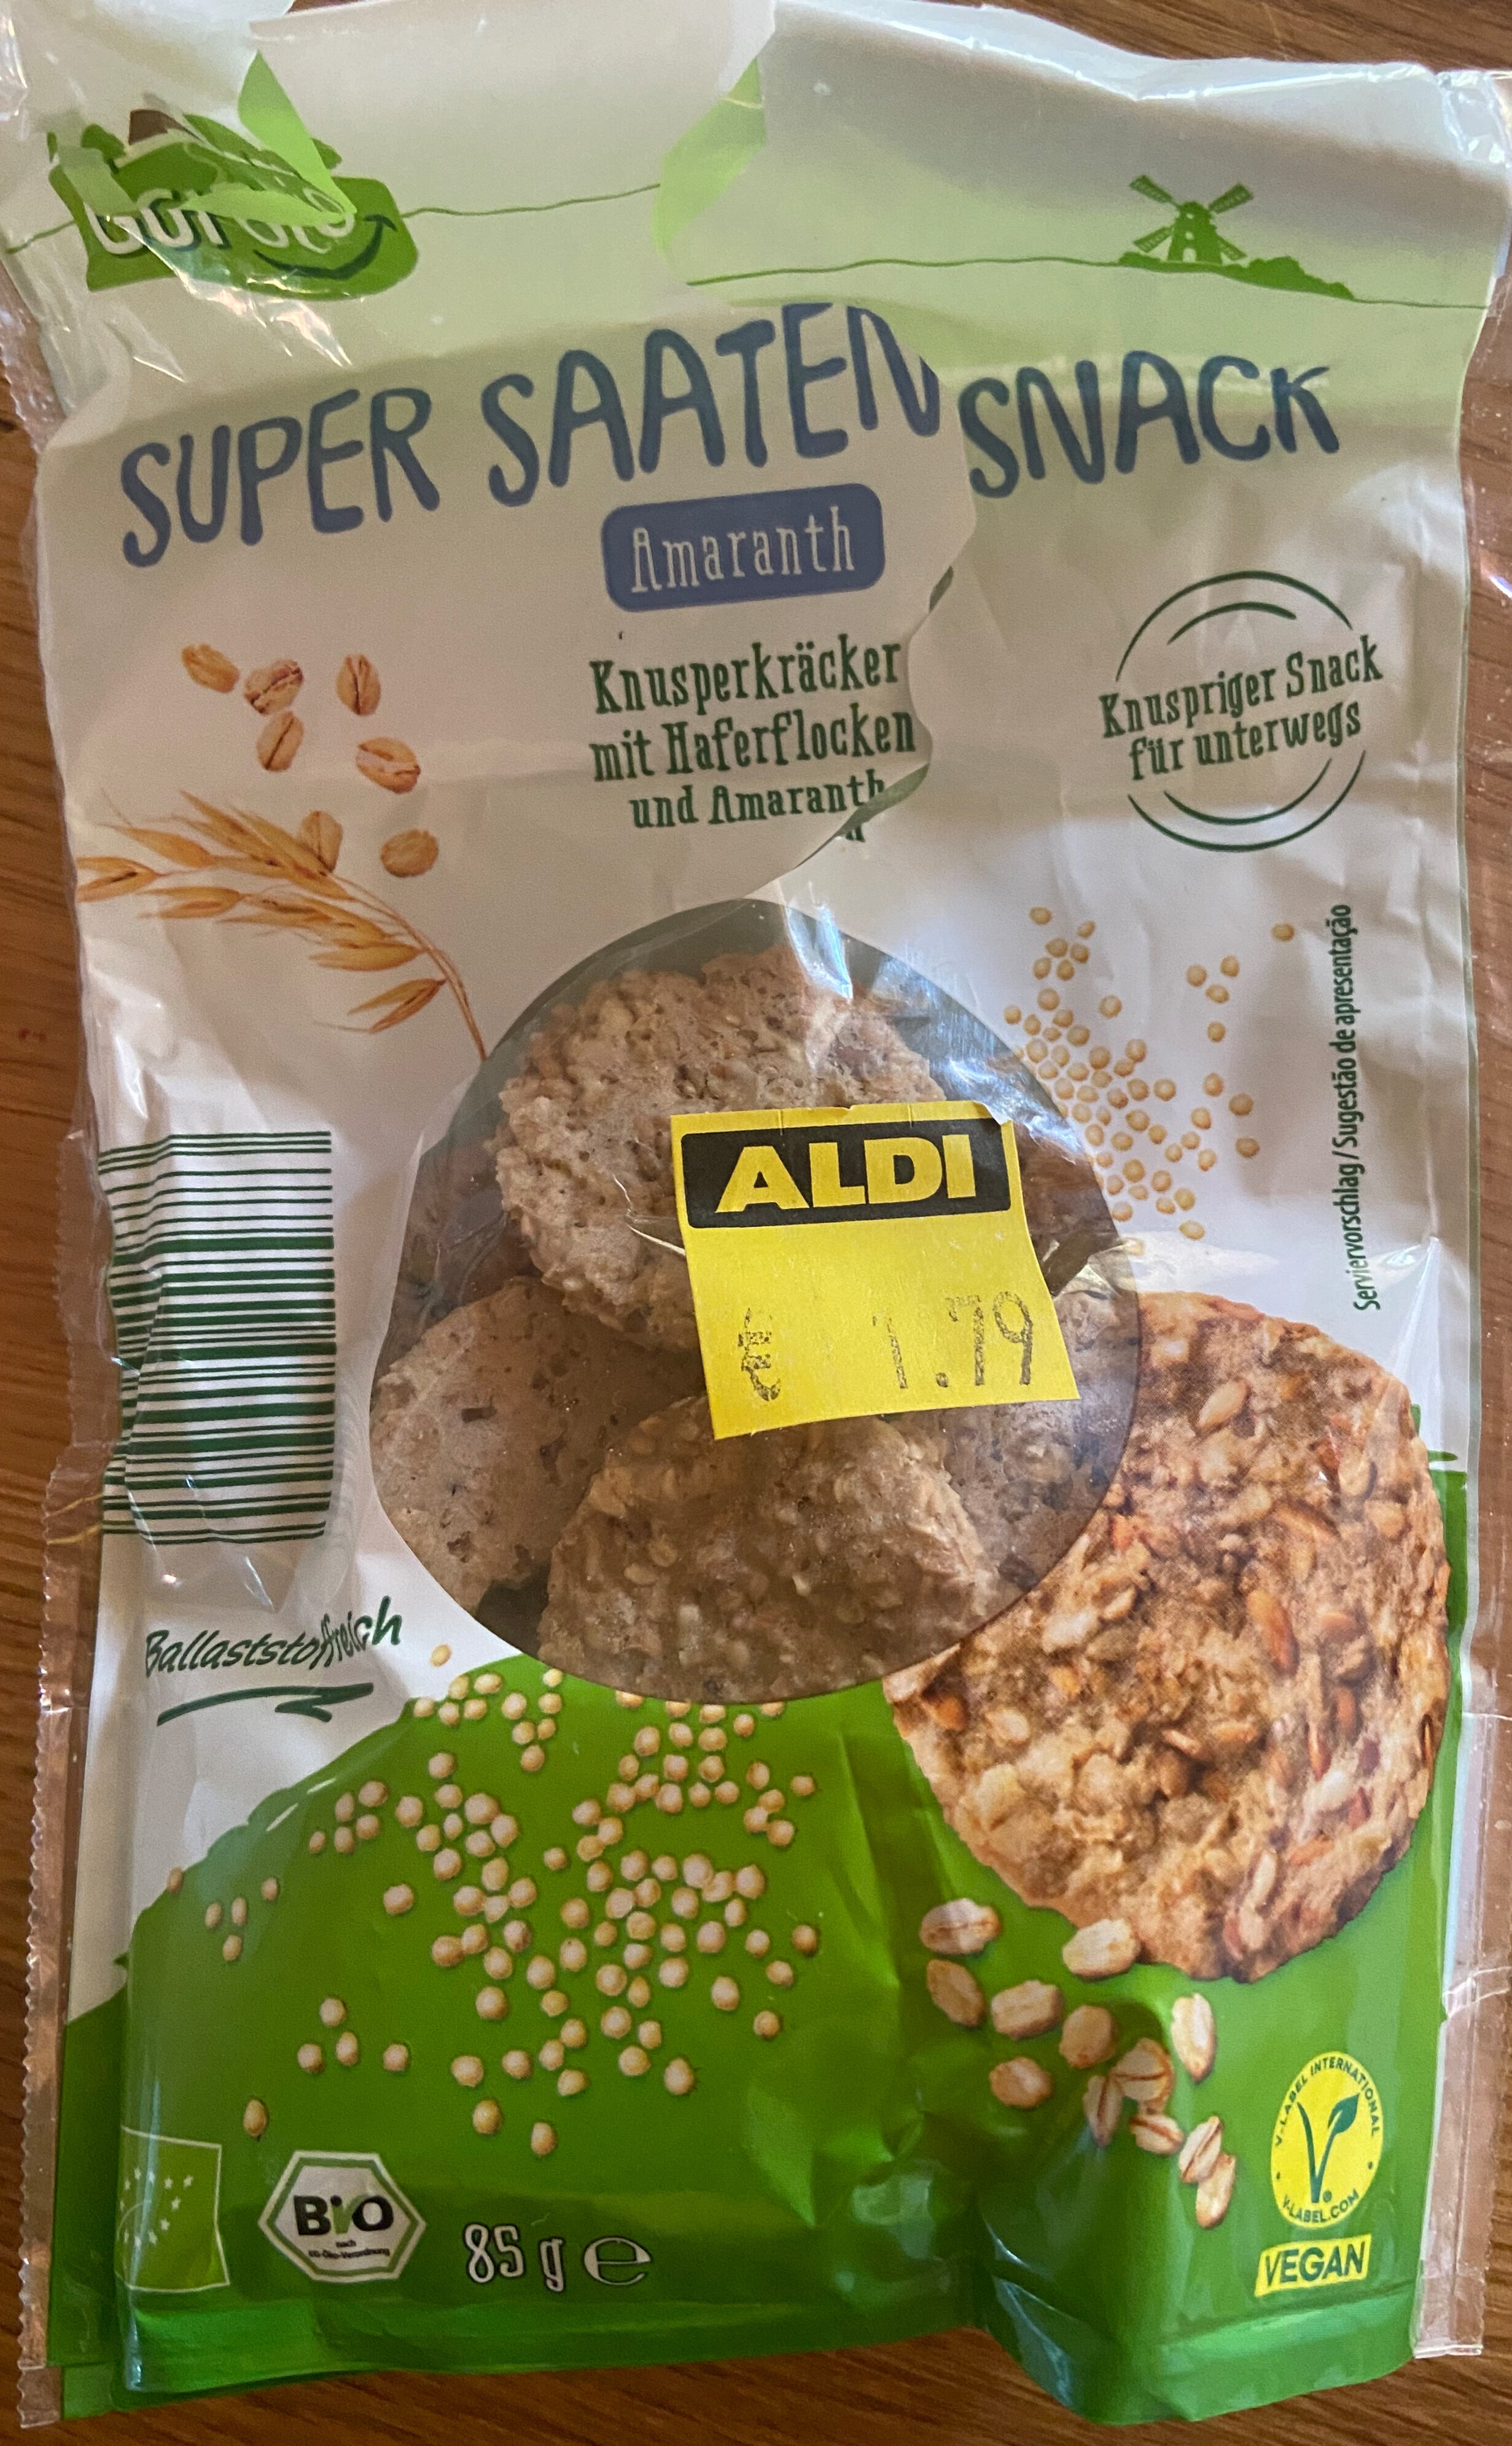 Super Saaten Snack Amarant - Produkt